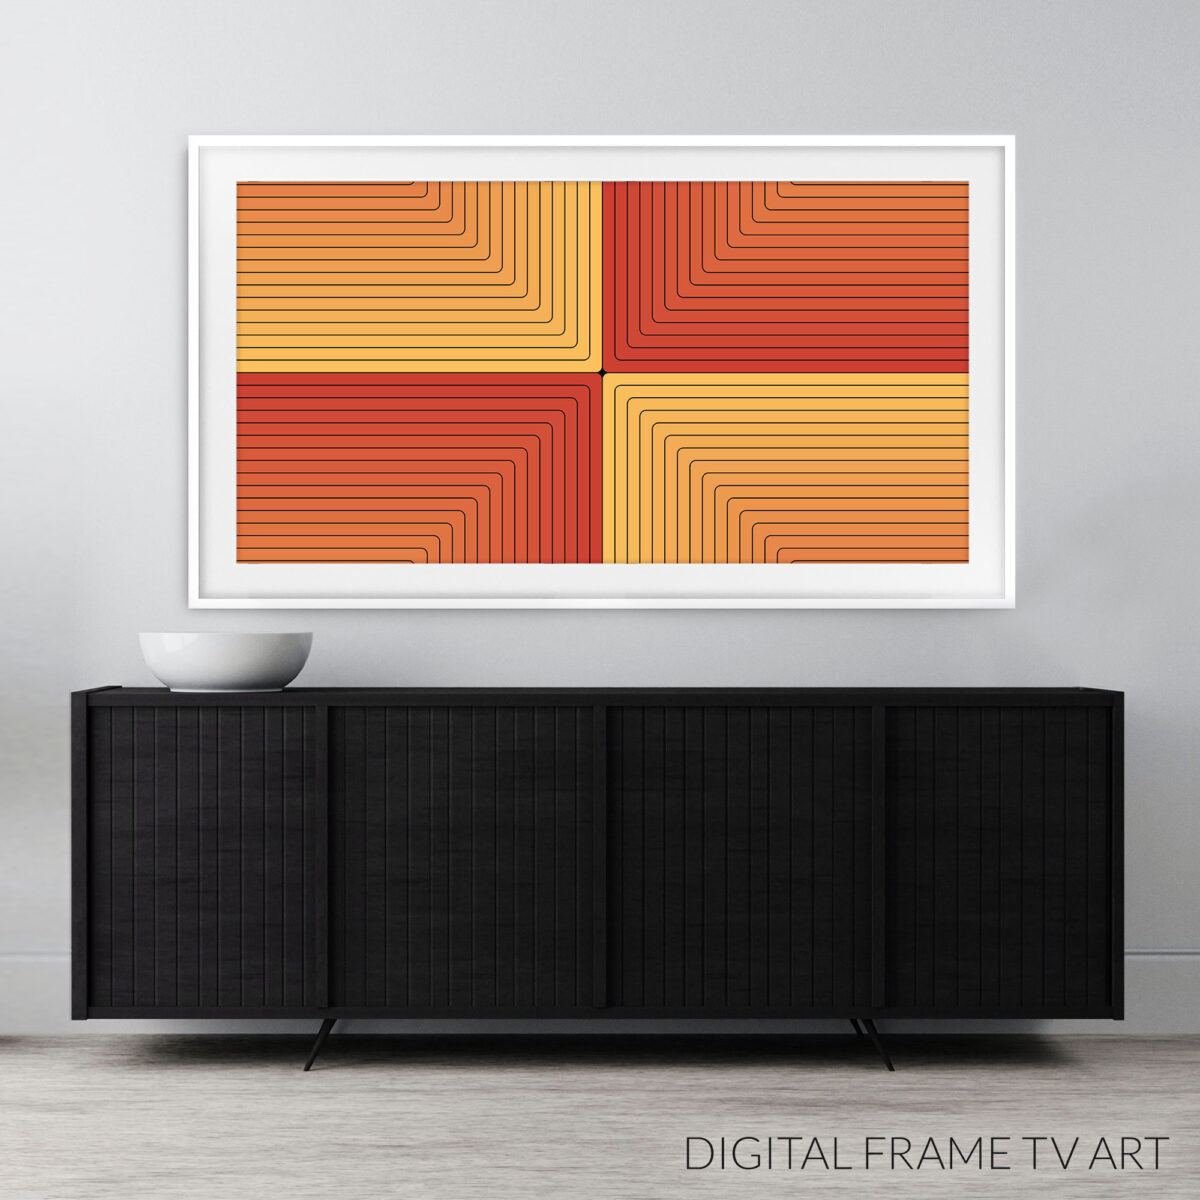 Scorcher digital wallpaper design on a large screen television.